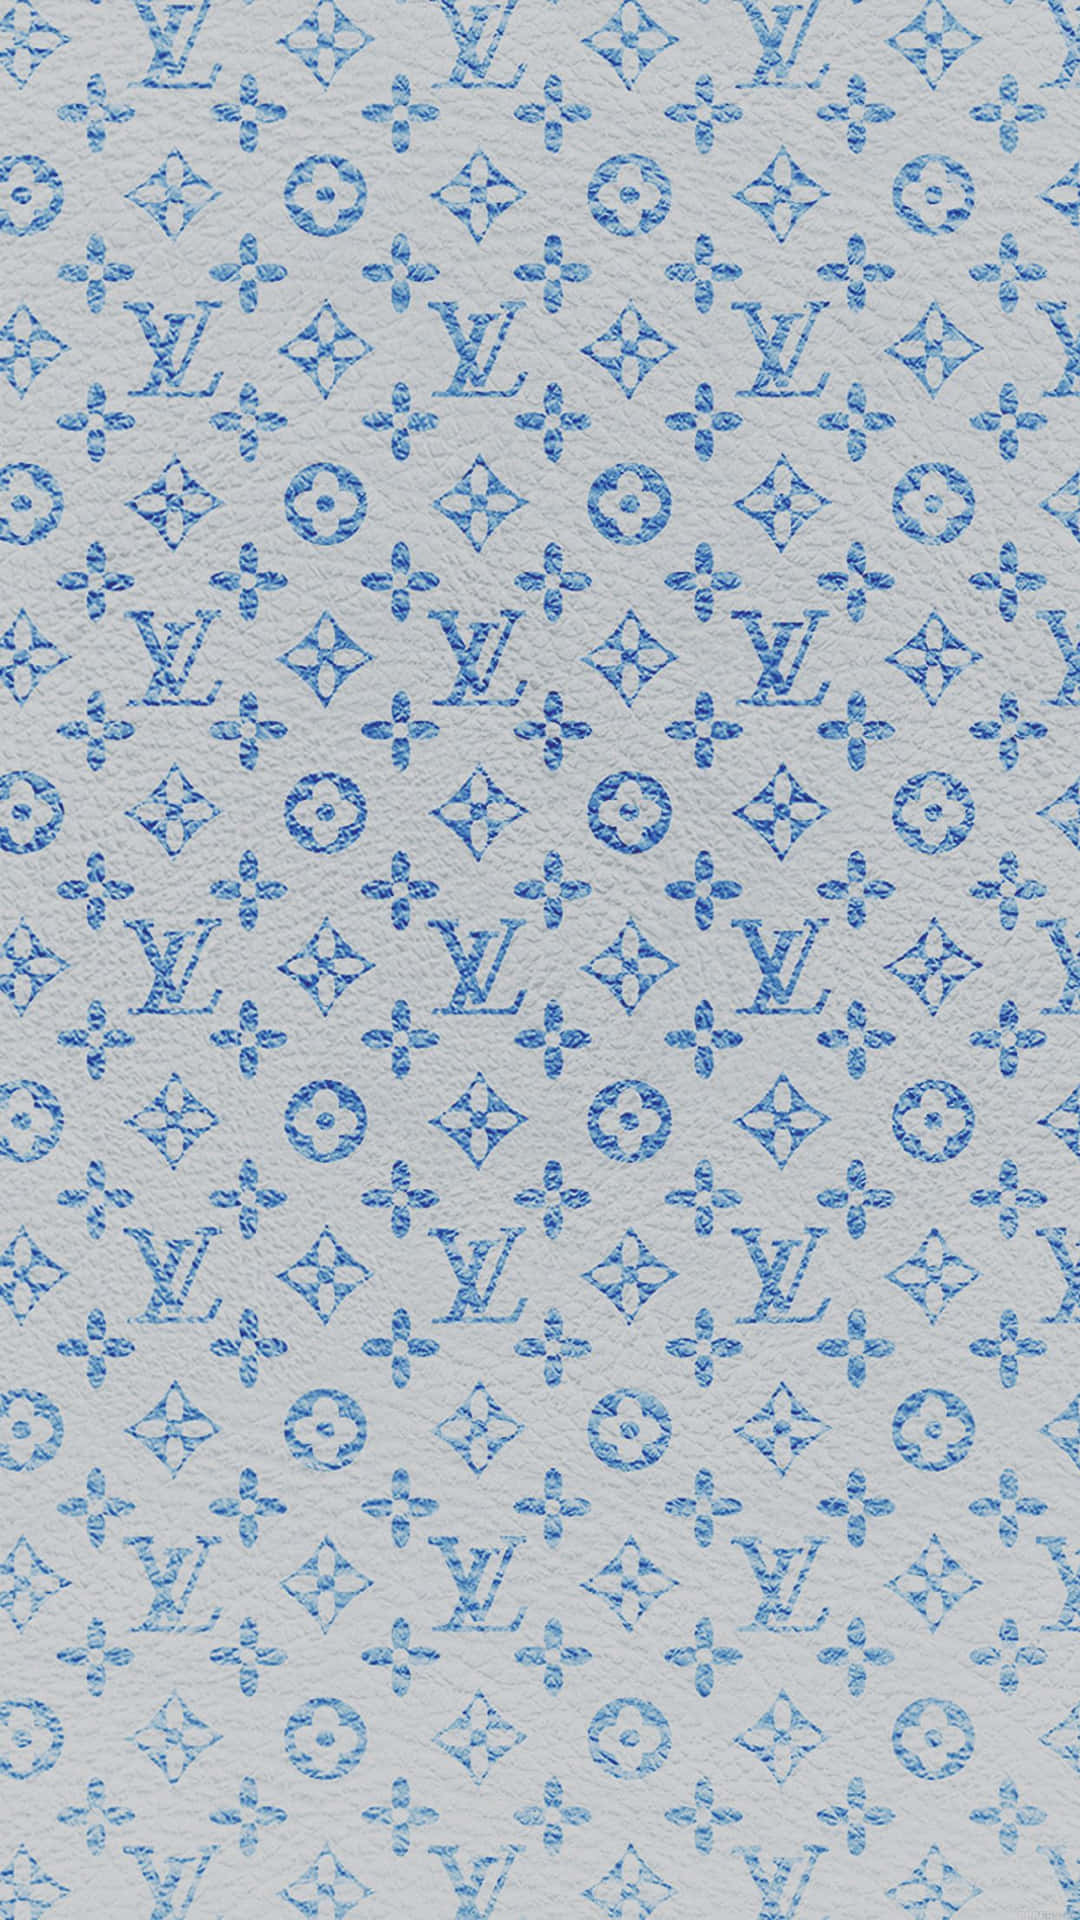 Bildmodische Accessoires In Louis Vuitton Blau Wallpaper